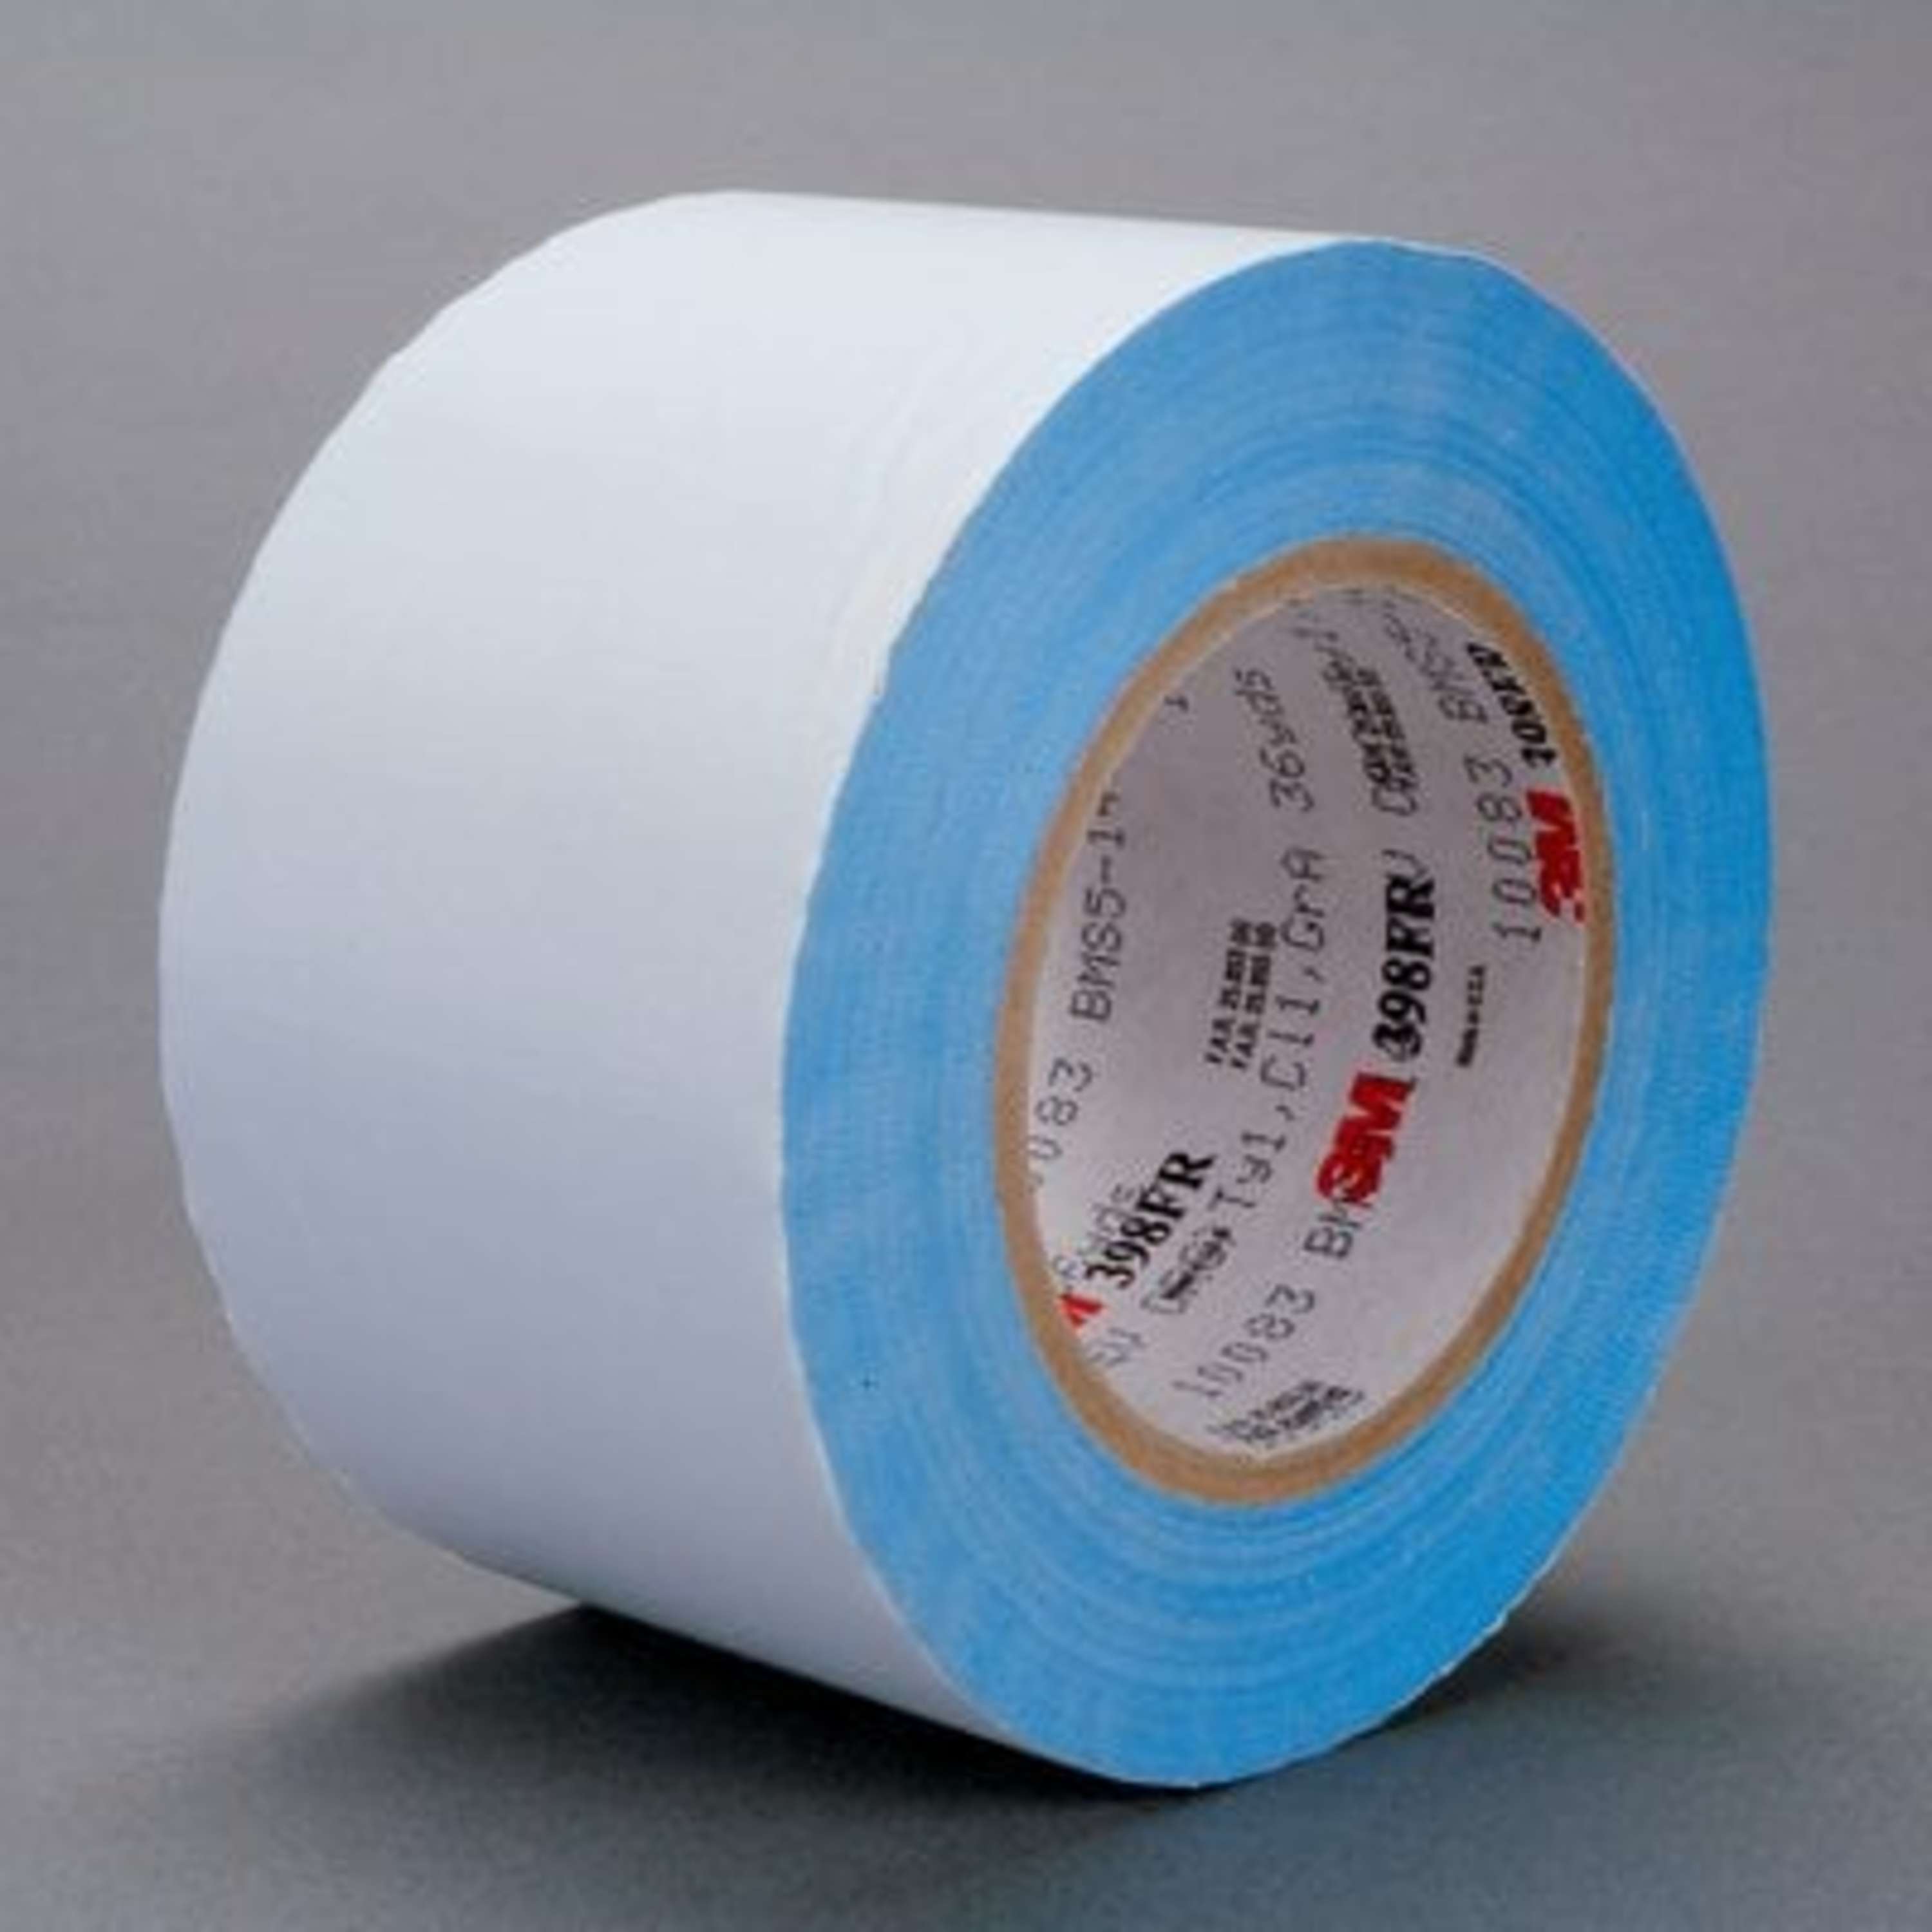 3M™ Glass Cloth Tape 398FR, White, 1 in x 36 yd, 7 mil, 36 rolls per
case